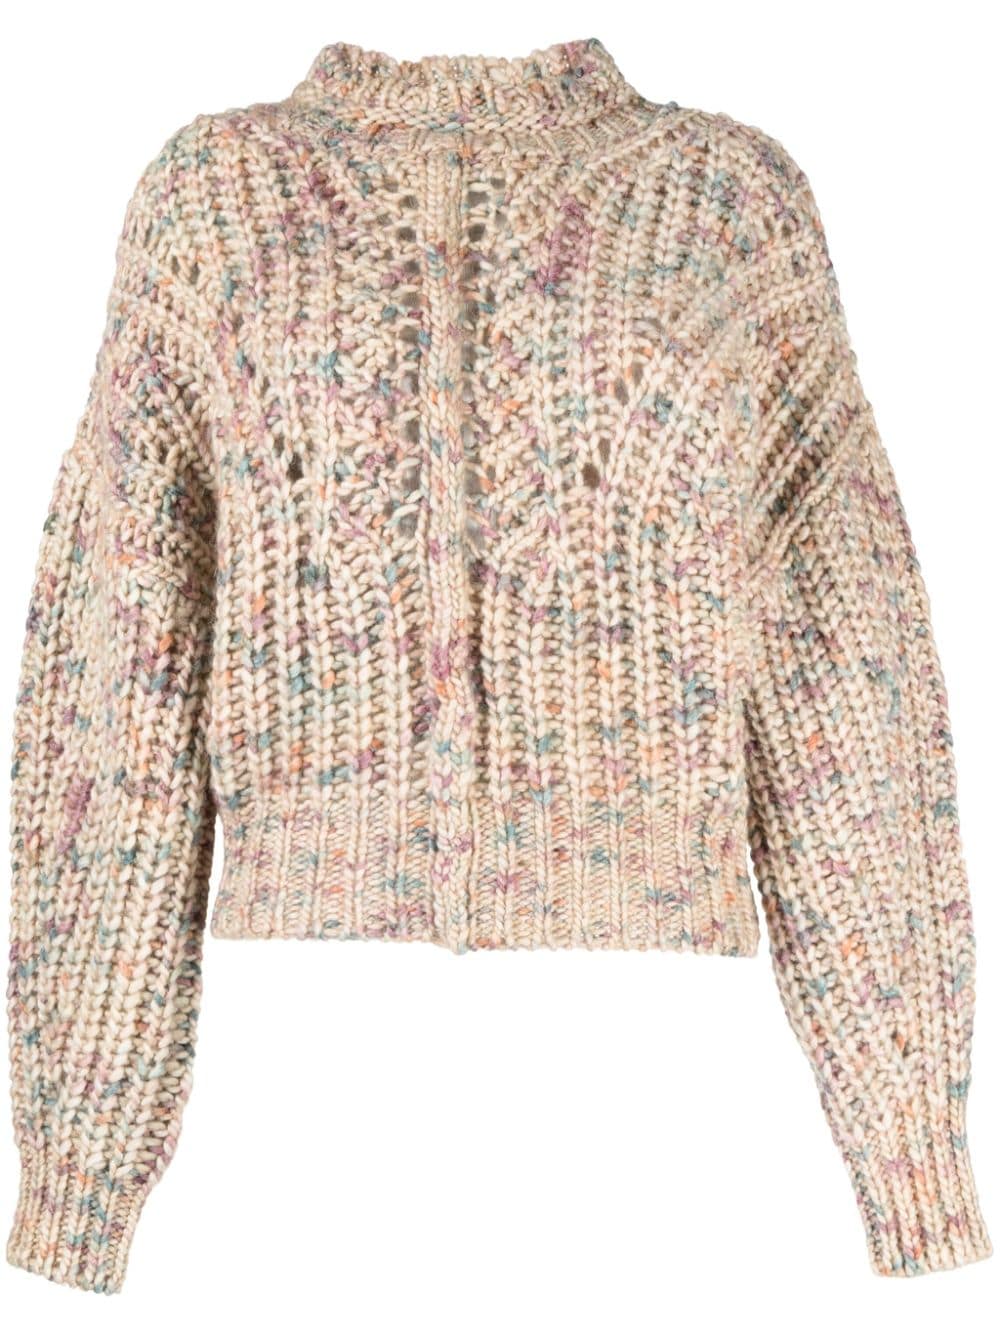 MARANT ÉTOILE Jallen chunky-knit jumper - Multicolour von MARANT ÉTOILE